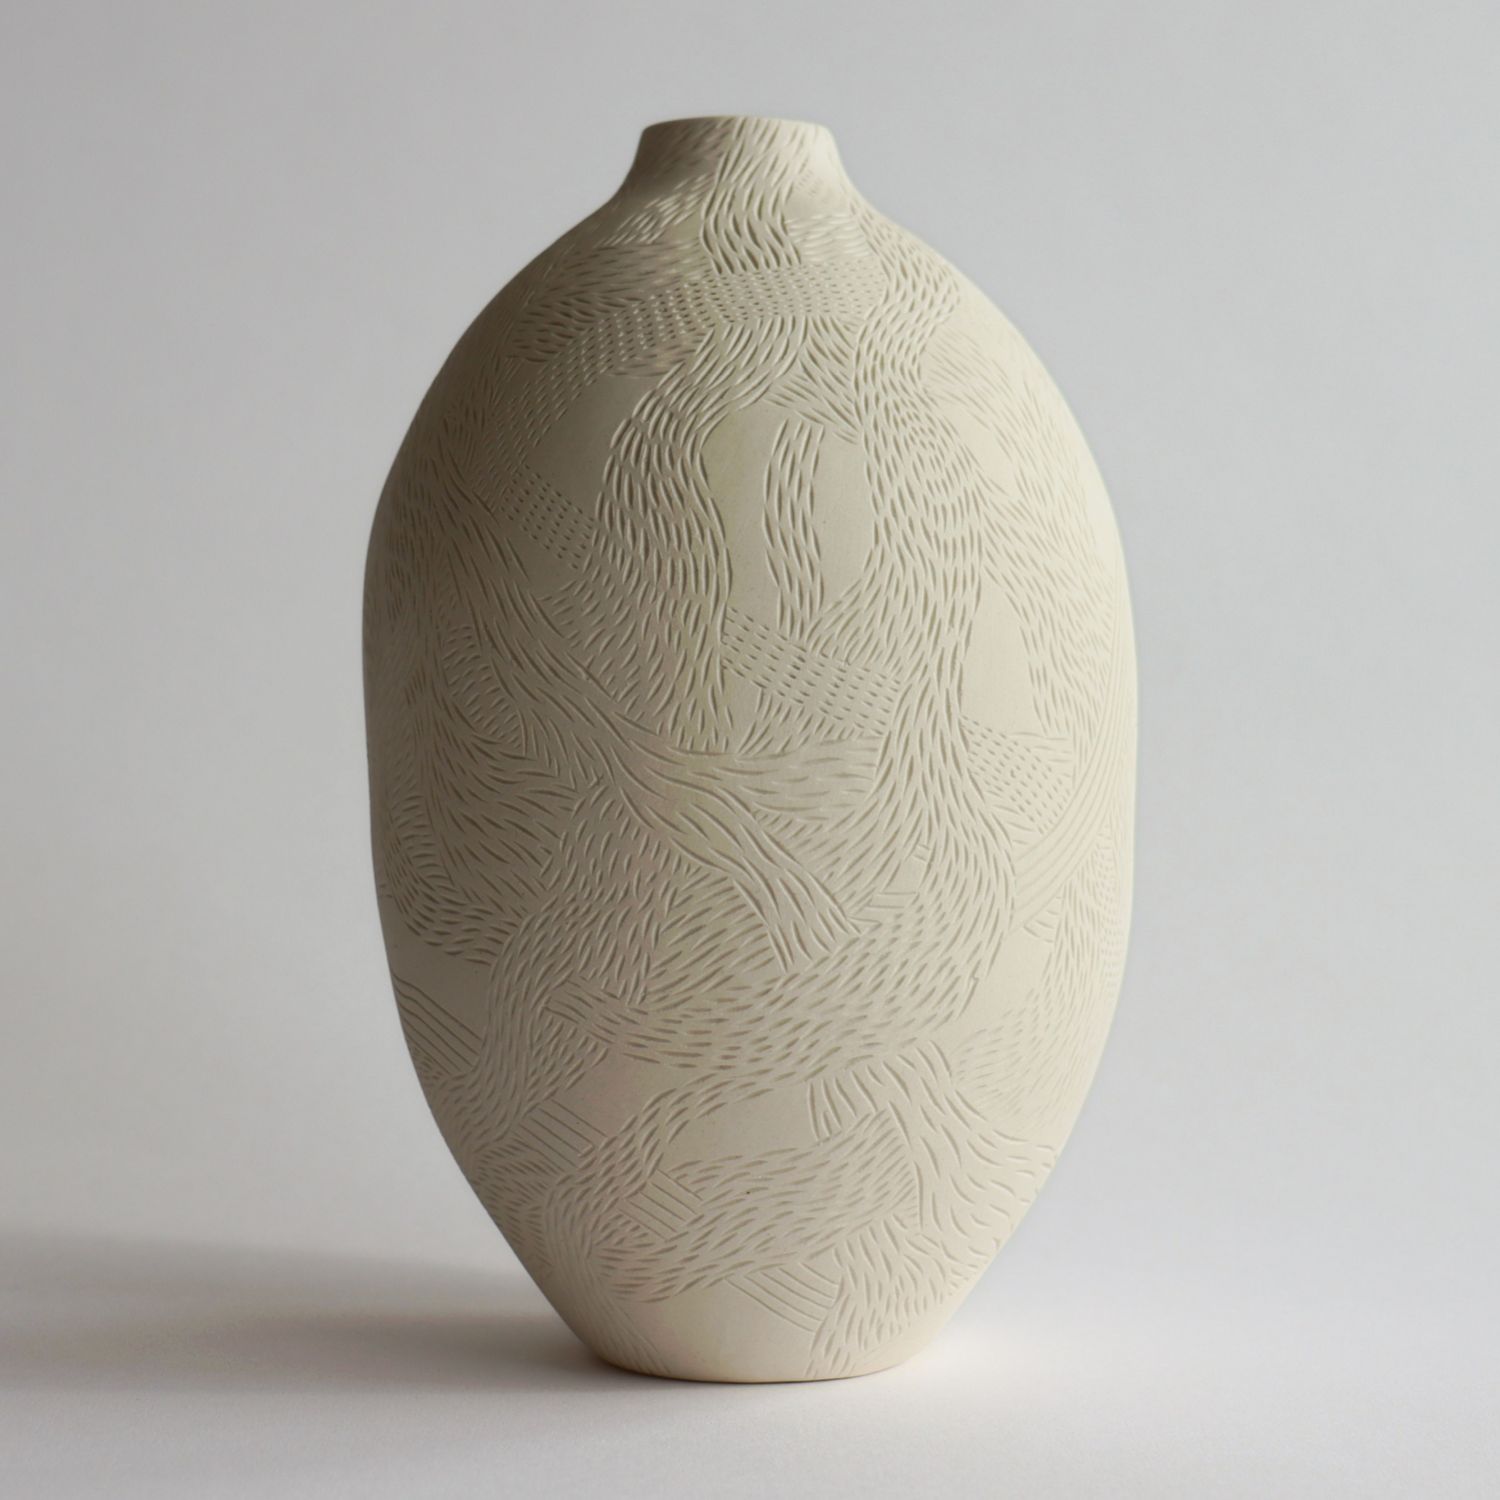 Talia Silva: Subtle Echoes – Medium Fully Carved Vessel Product Image 1 of 1